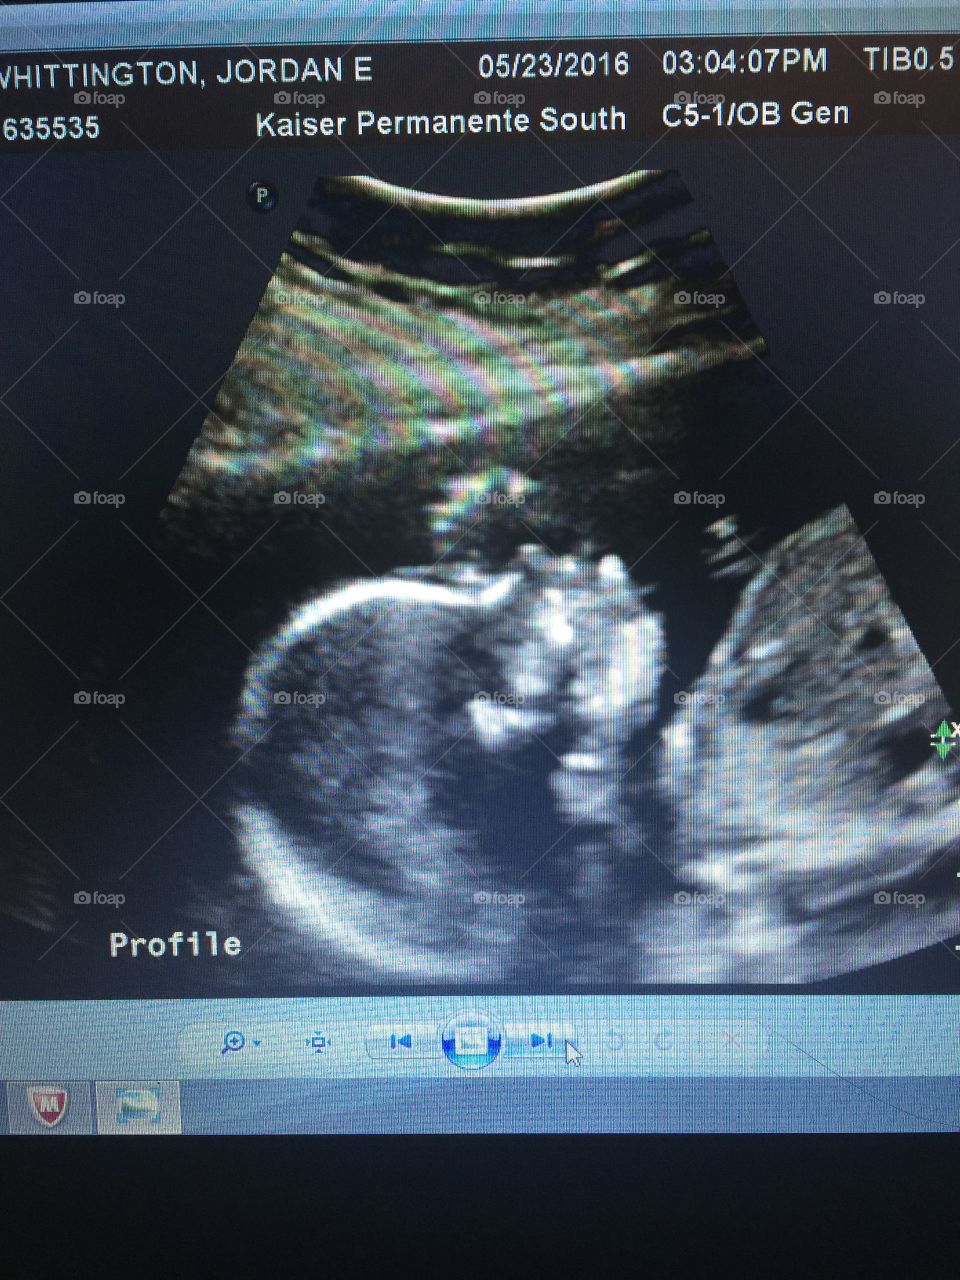 My baby's ultrasound 